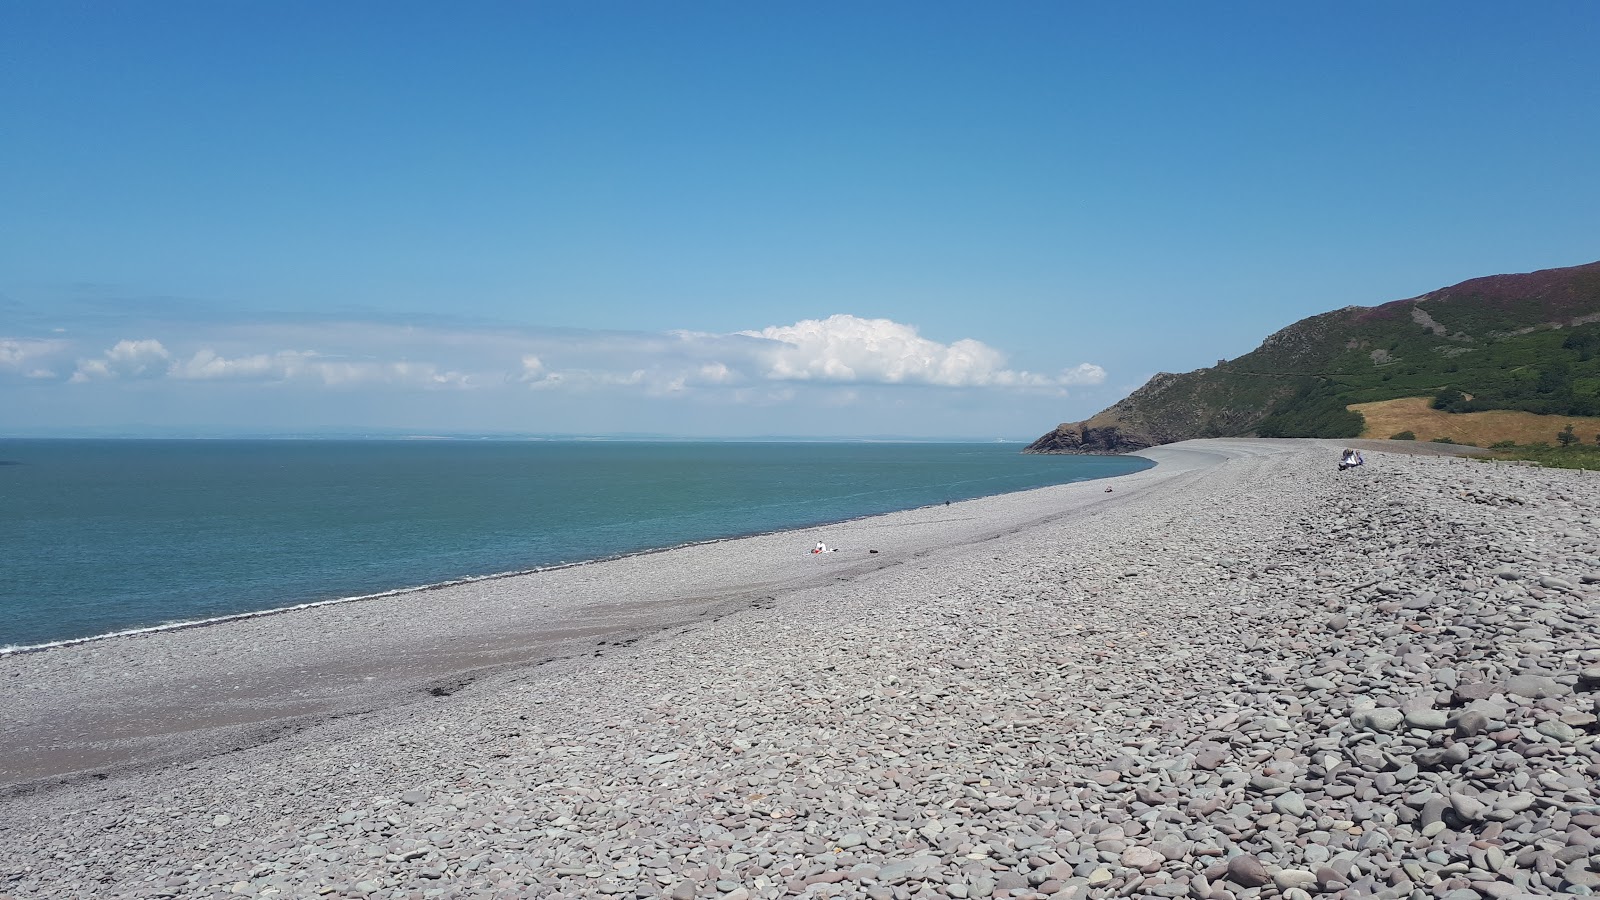 Fotografija Plaža Bossington z sivi kamenček površino